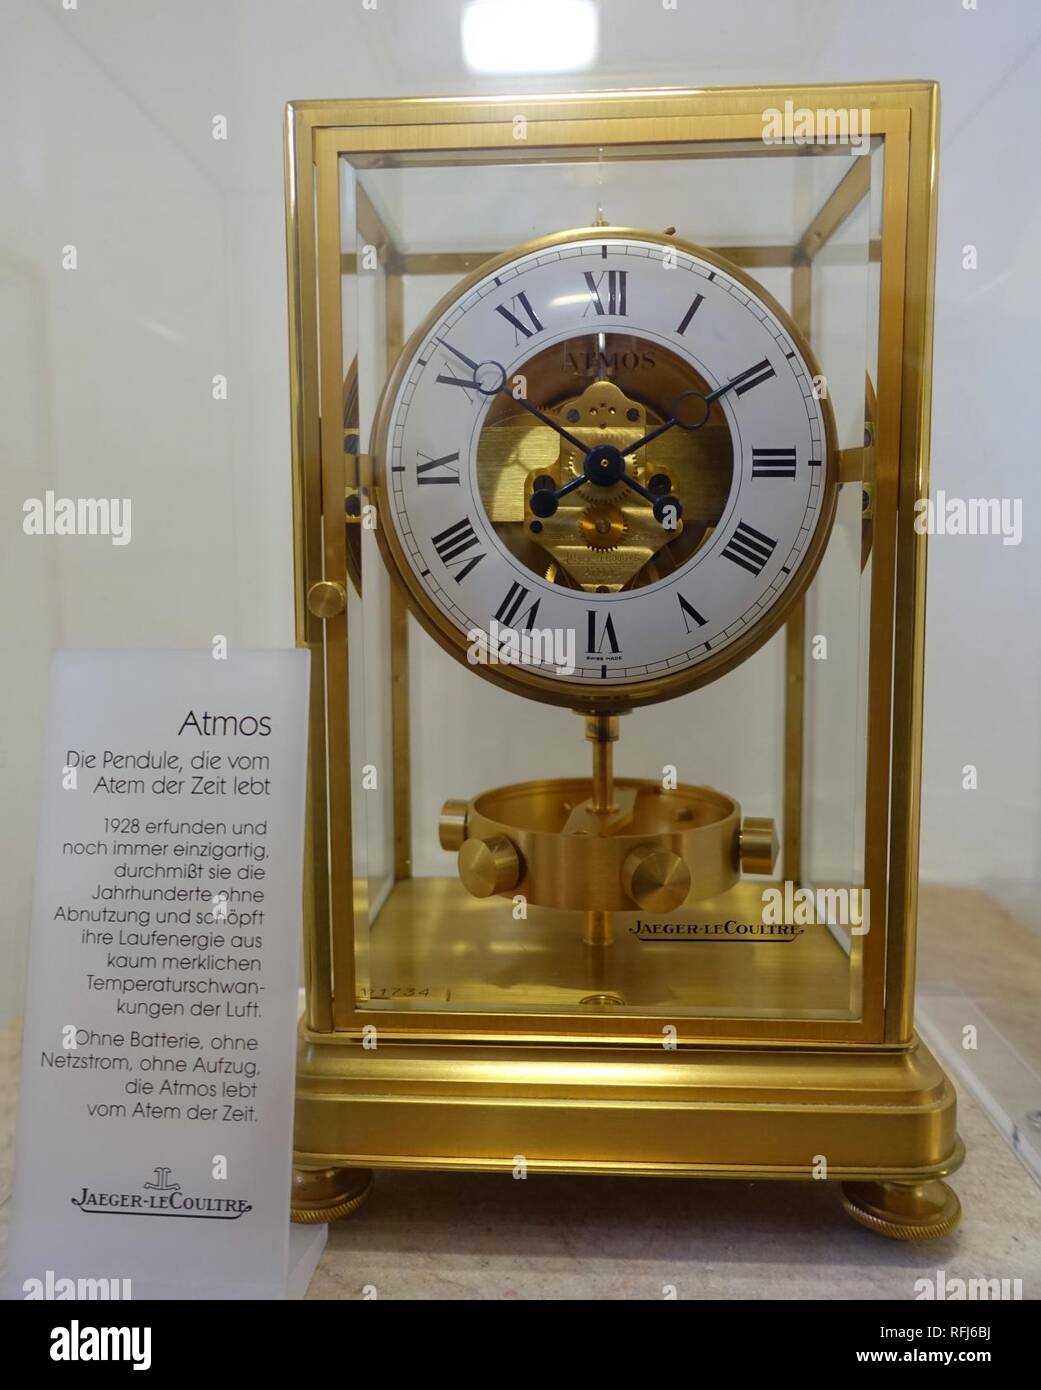 Atmos clock prototype, Jaeger-LeCoultre - Karl Gebhardt Horological  Collection - Gewerbemuseum - Nuremberg, Germany Stock Photo - Alamy